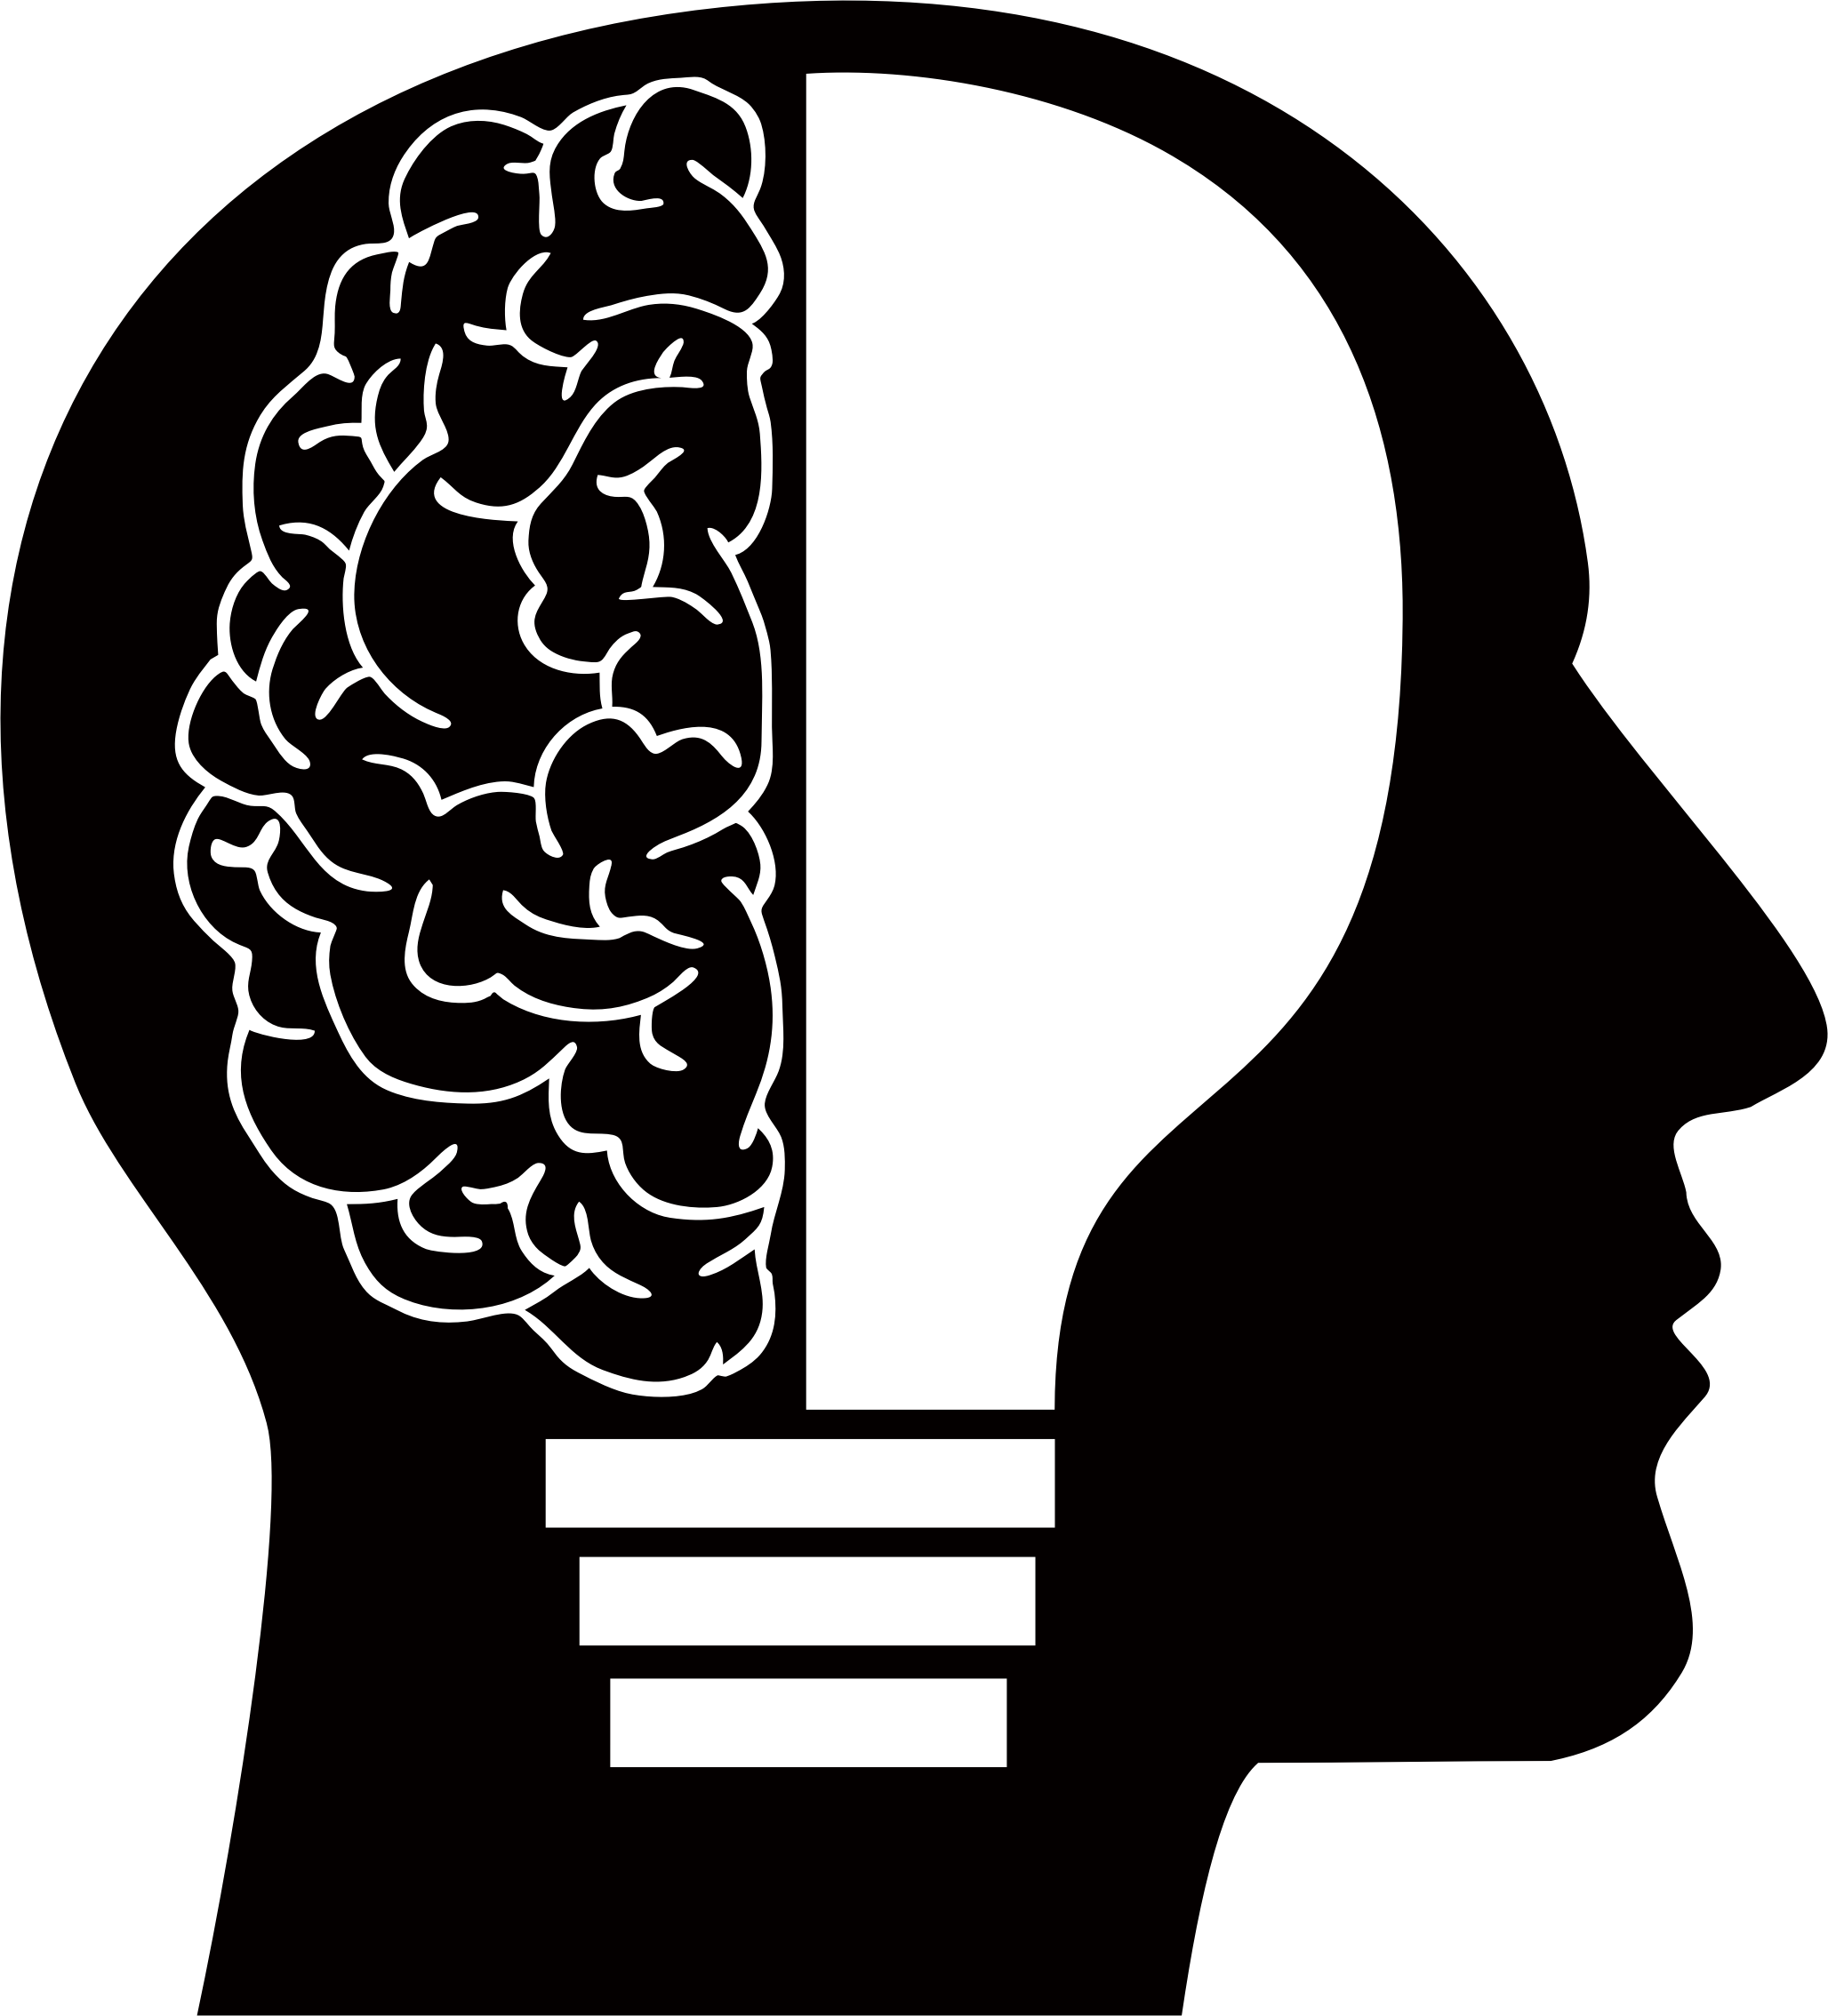 Png. Clipart Man Light Bulb Brain - Ensaymada Black And White, Transparent background PNG HD thumbnail